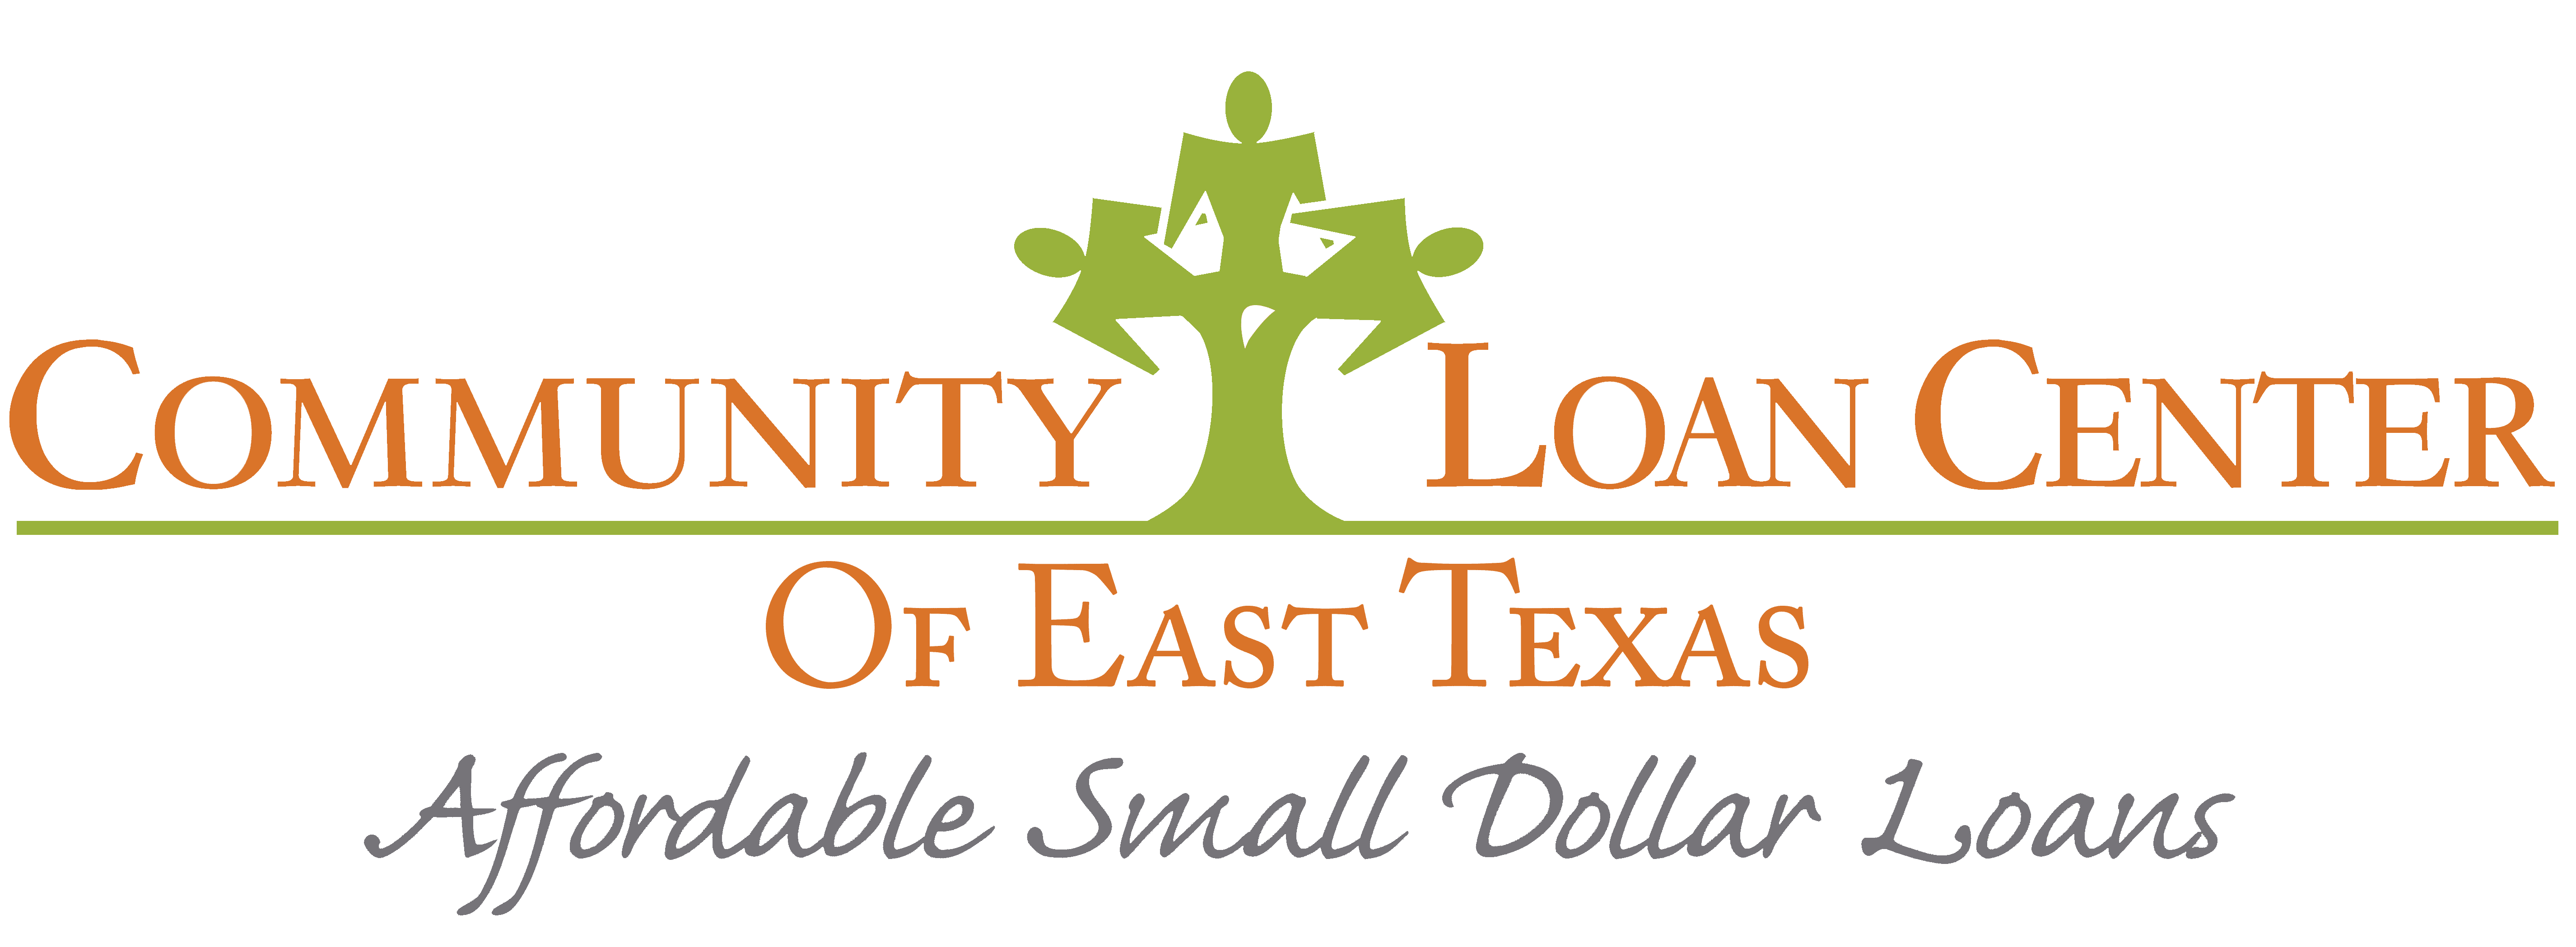 Community Loan Center of East Texas